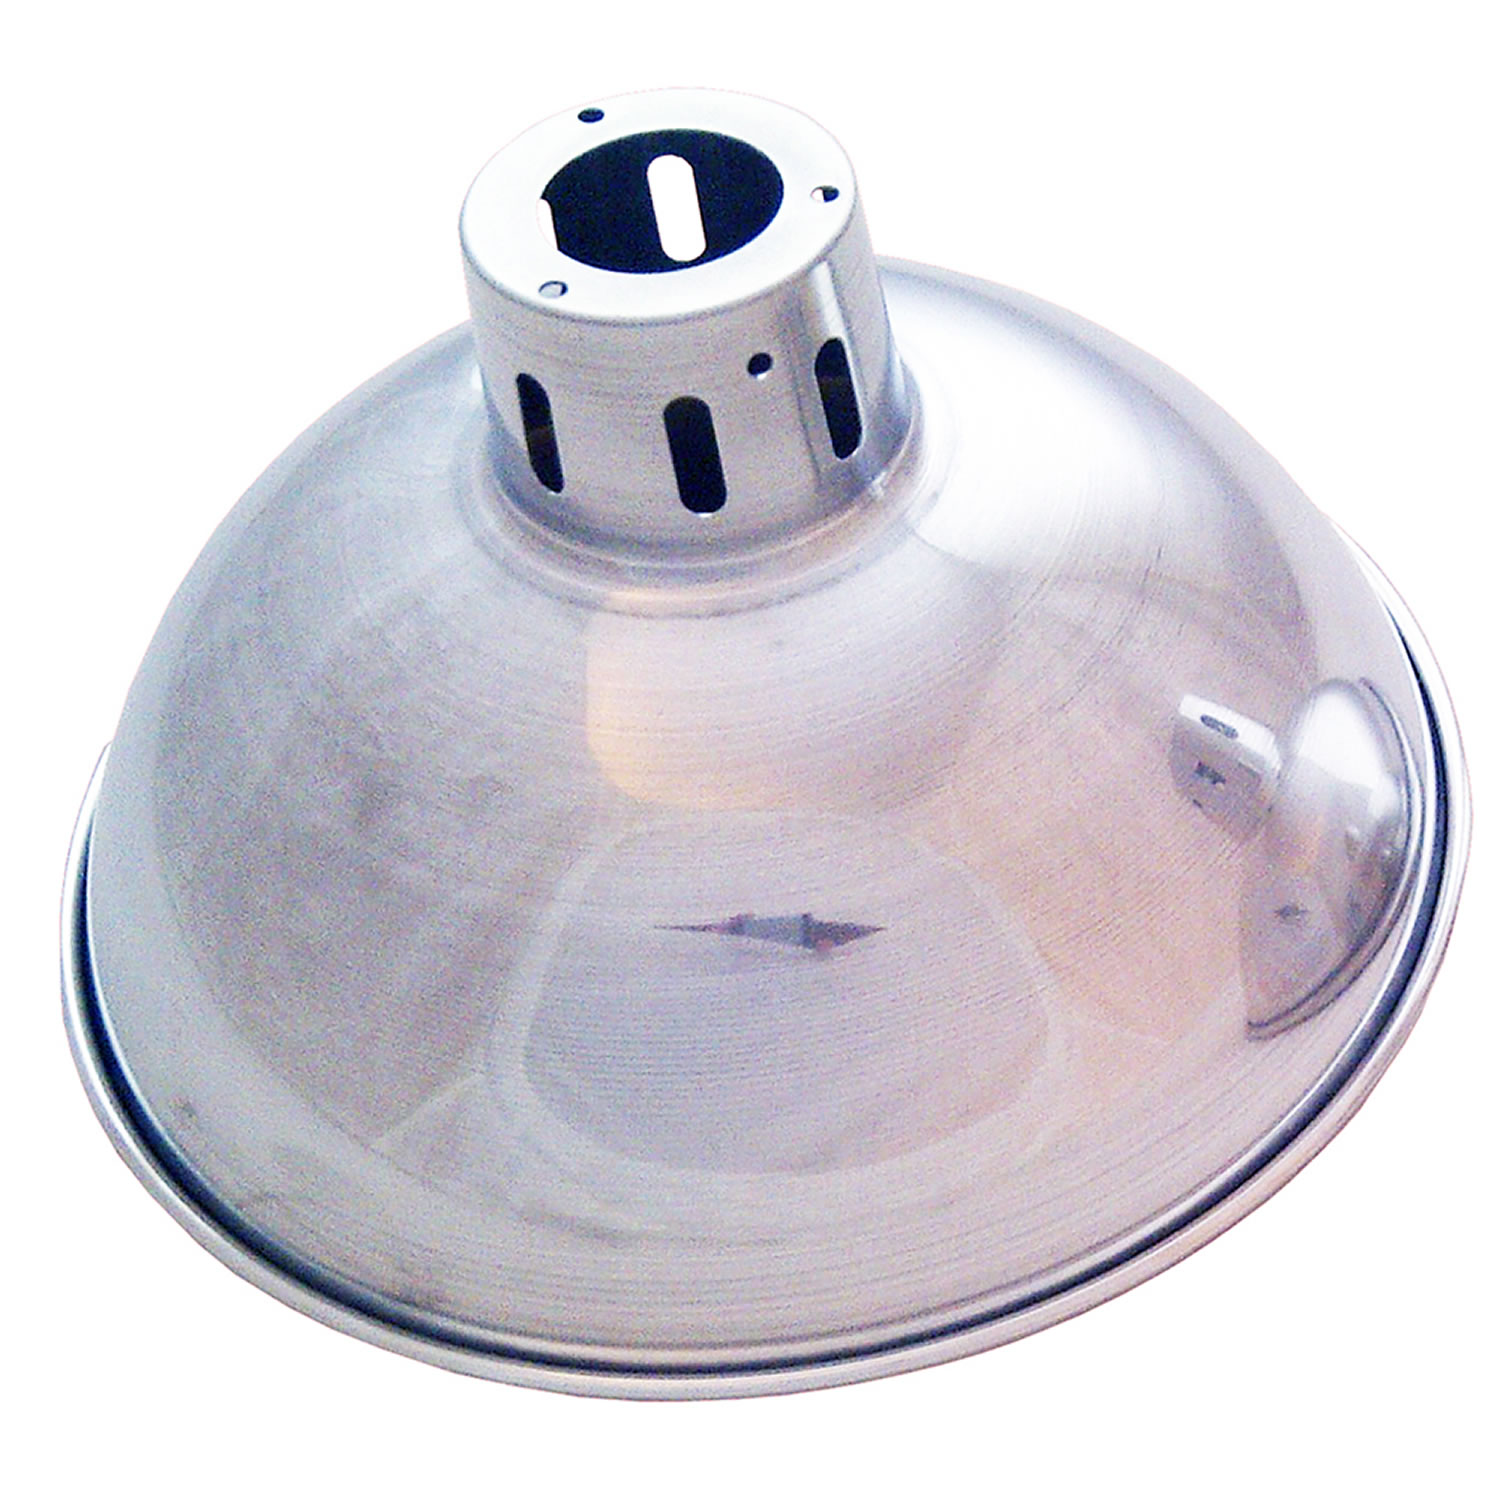 INTELEC ALUMINIUM SHADE FOR INFRA-RED HEAT LAMP 8 INCH